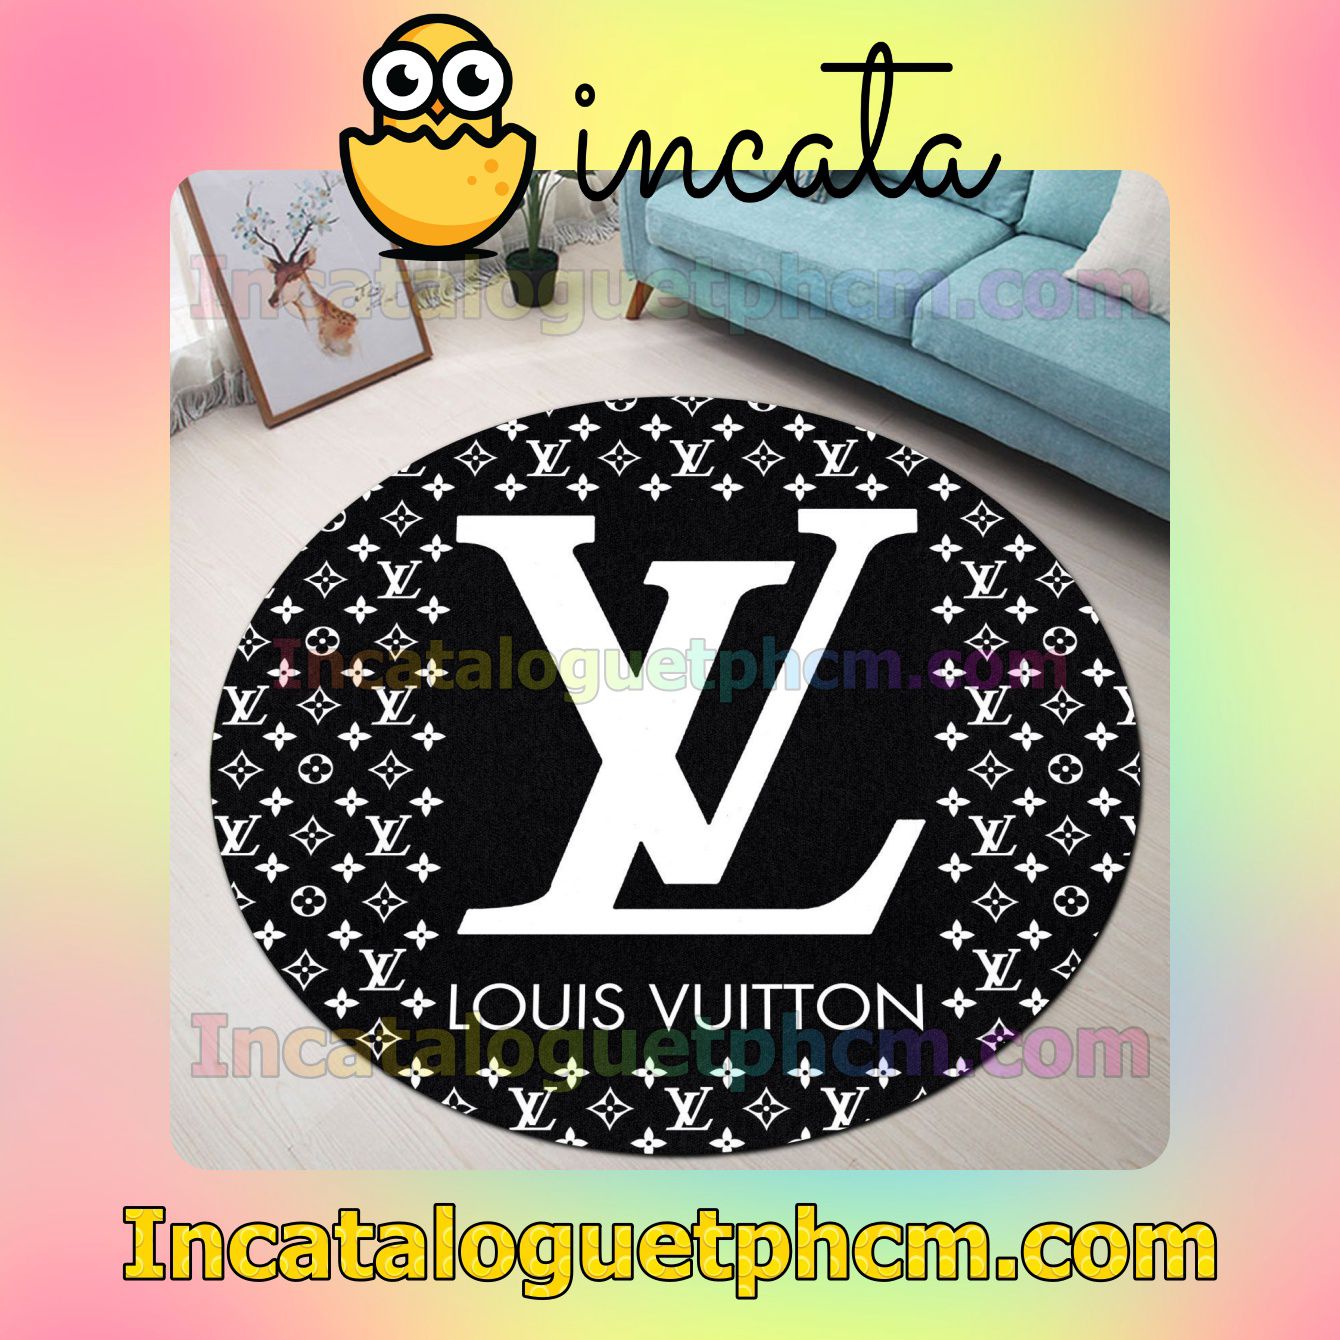 Louis Vuitton Monogram With White Big Logo Center Black Round Carpet Rugs For Kitchen